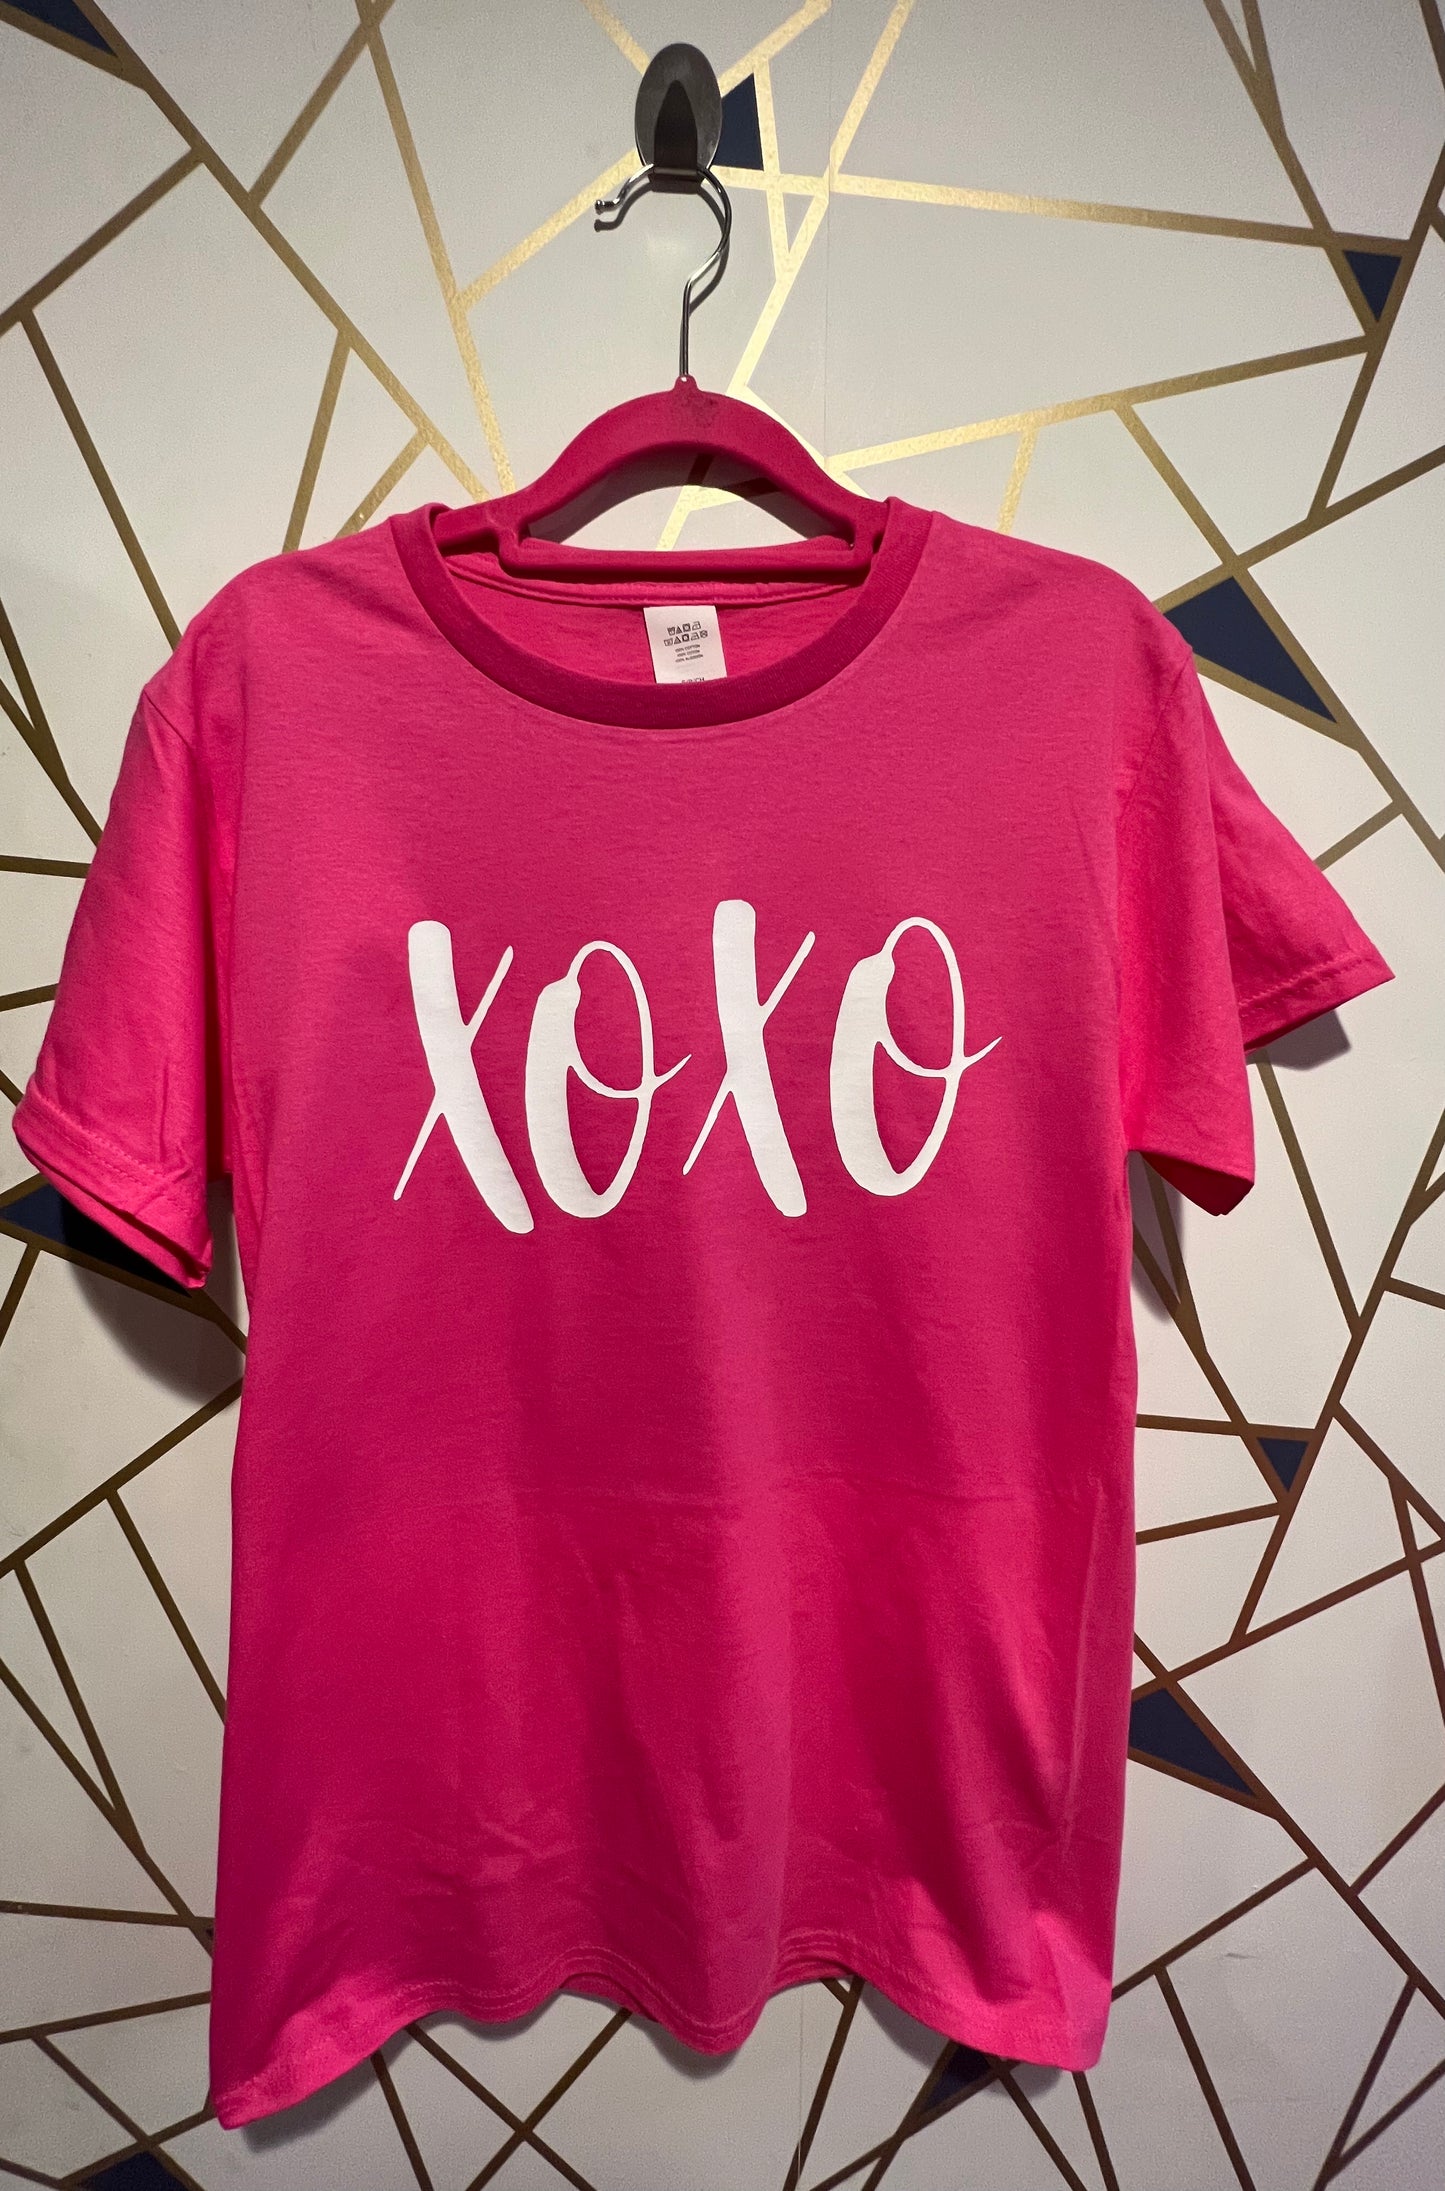 Pink Xoxo Graphic T Shirt